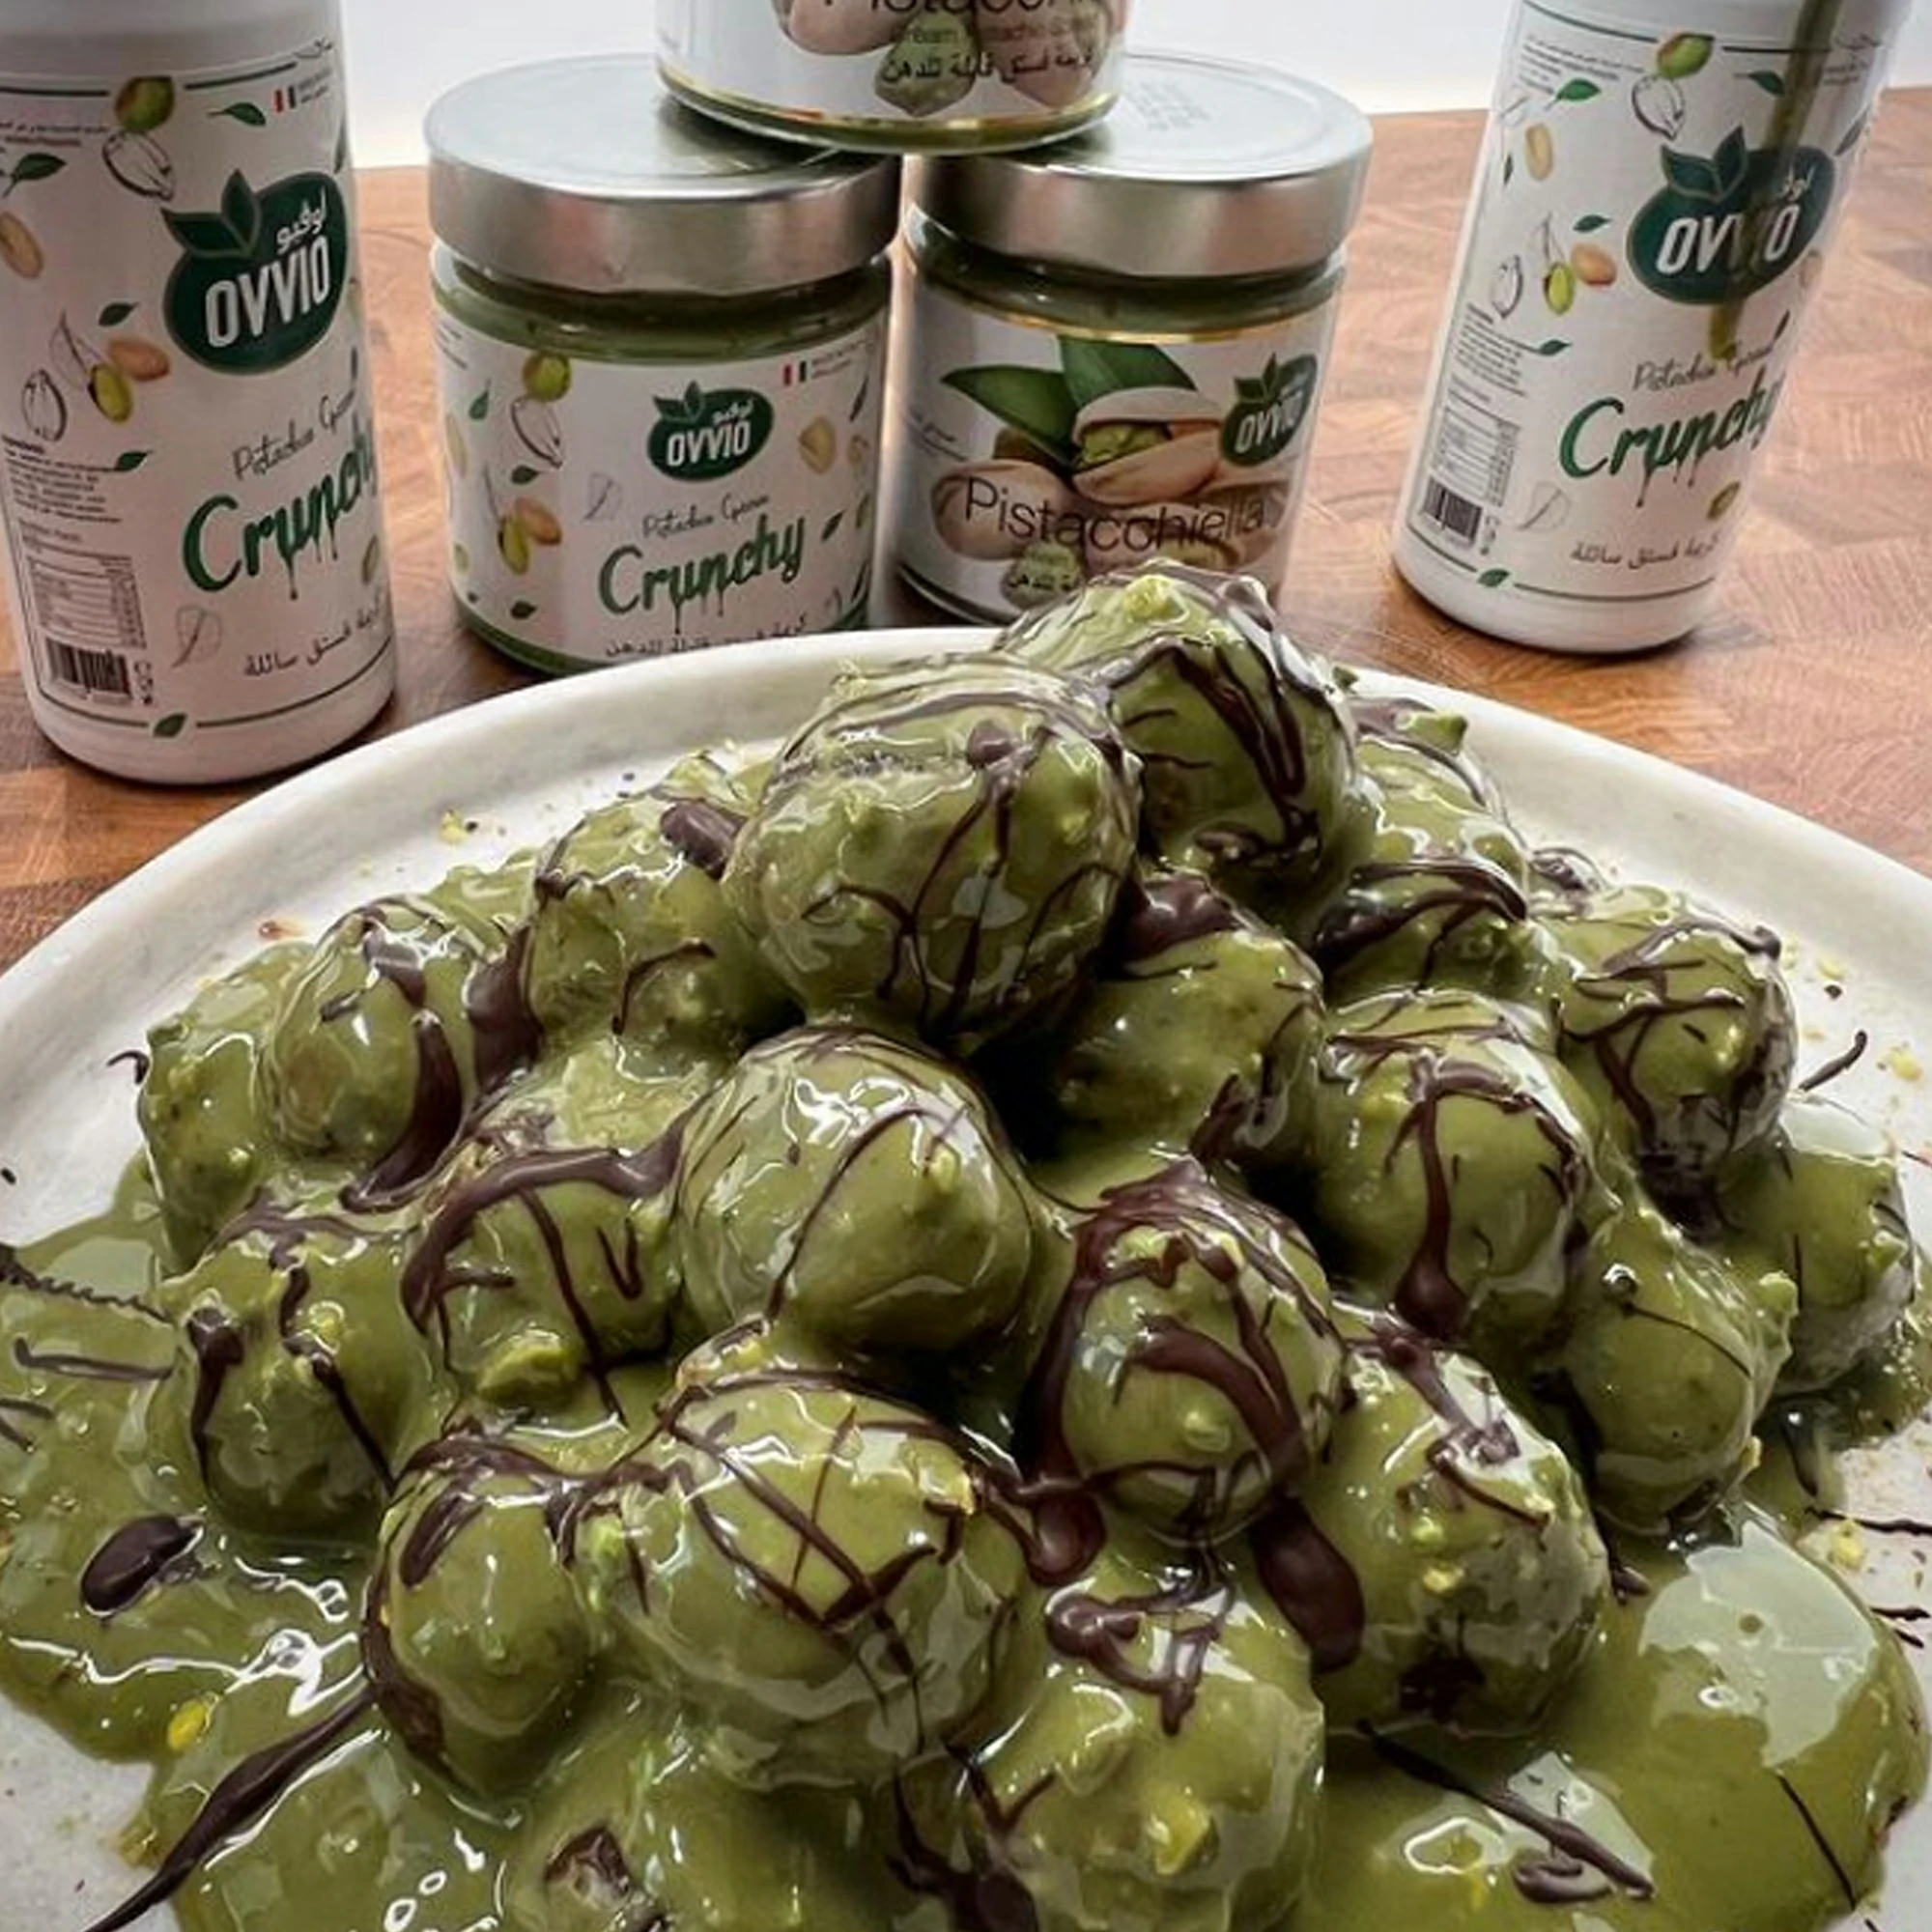 Dates balls with pistachio cream from Ovvio